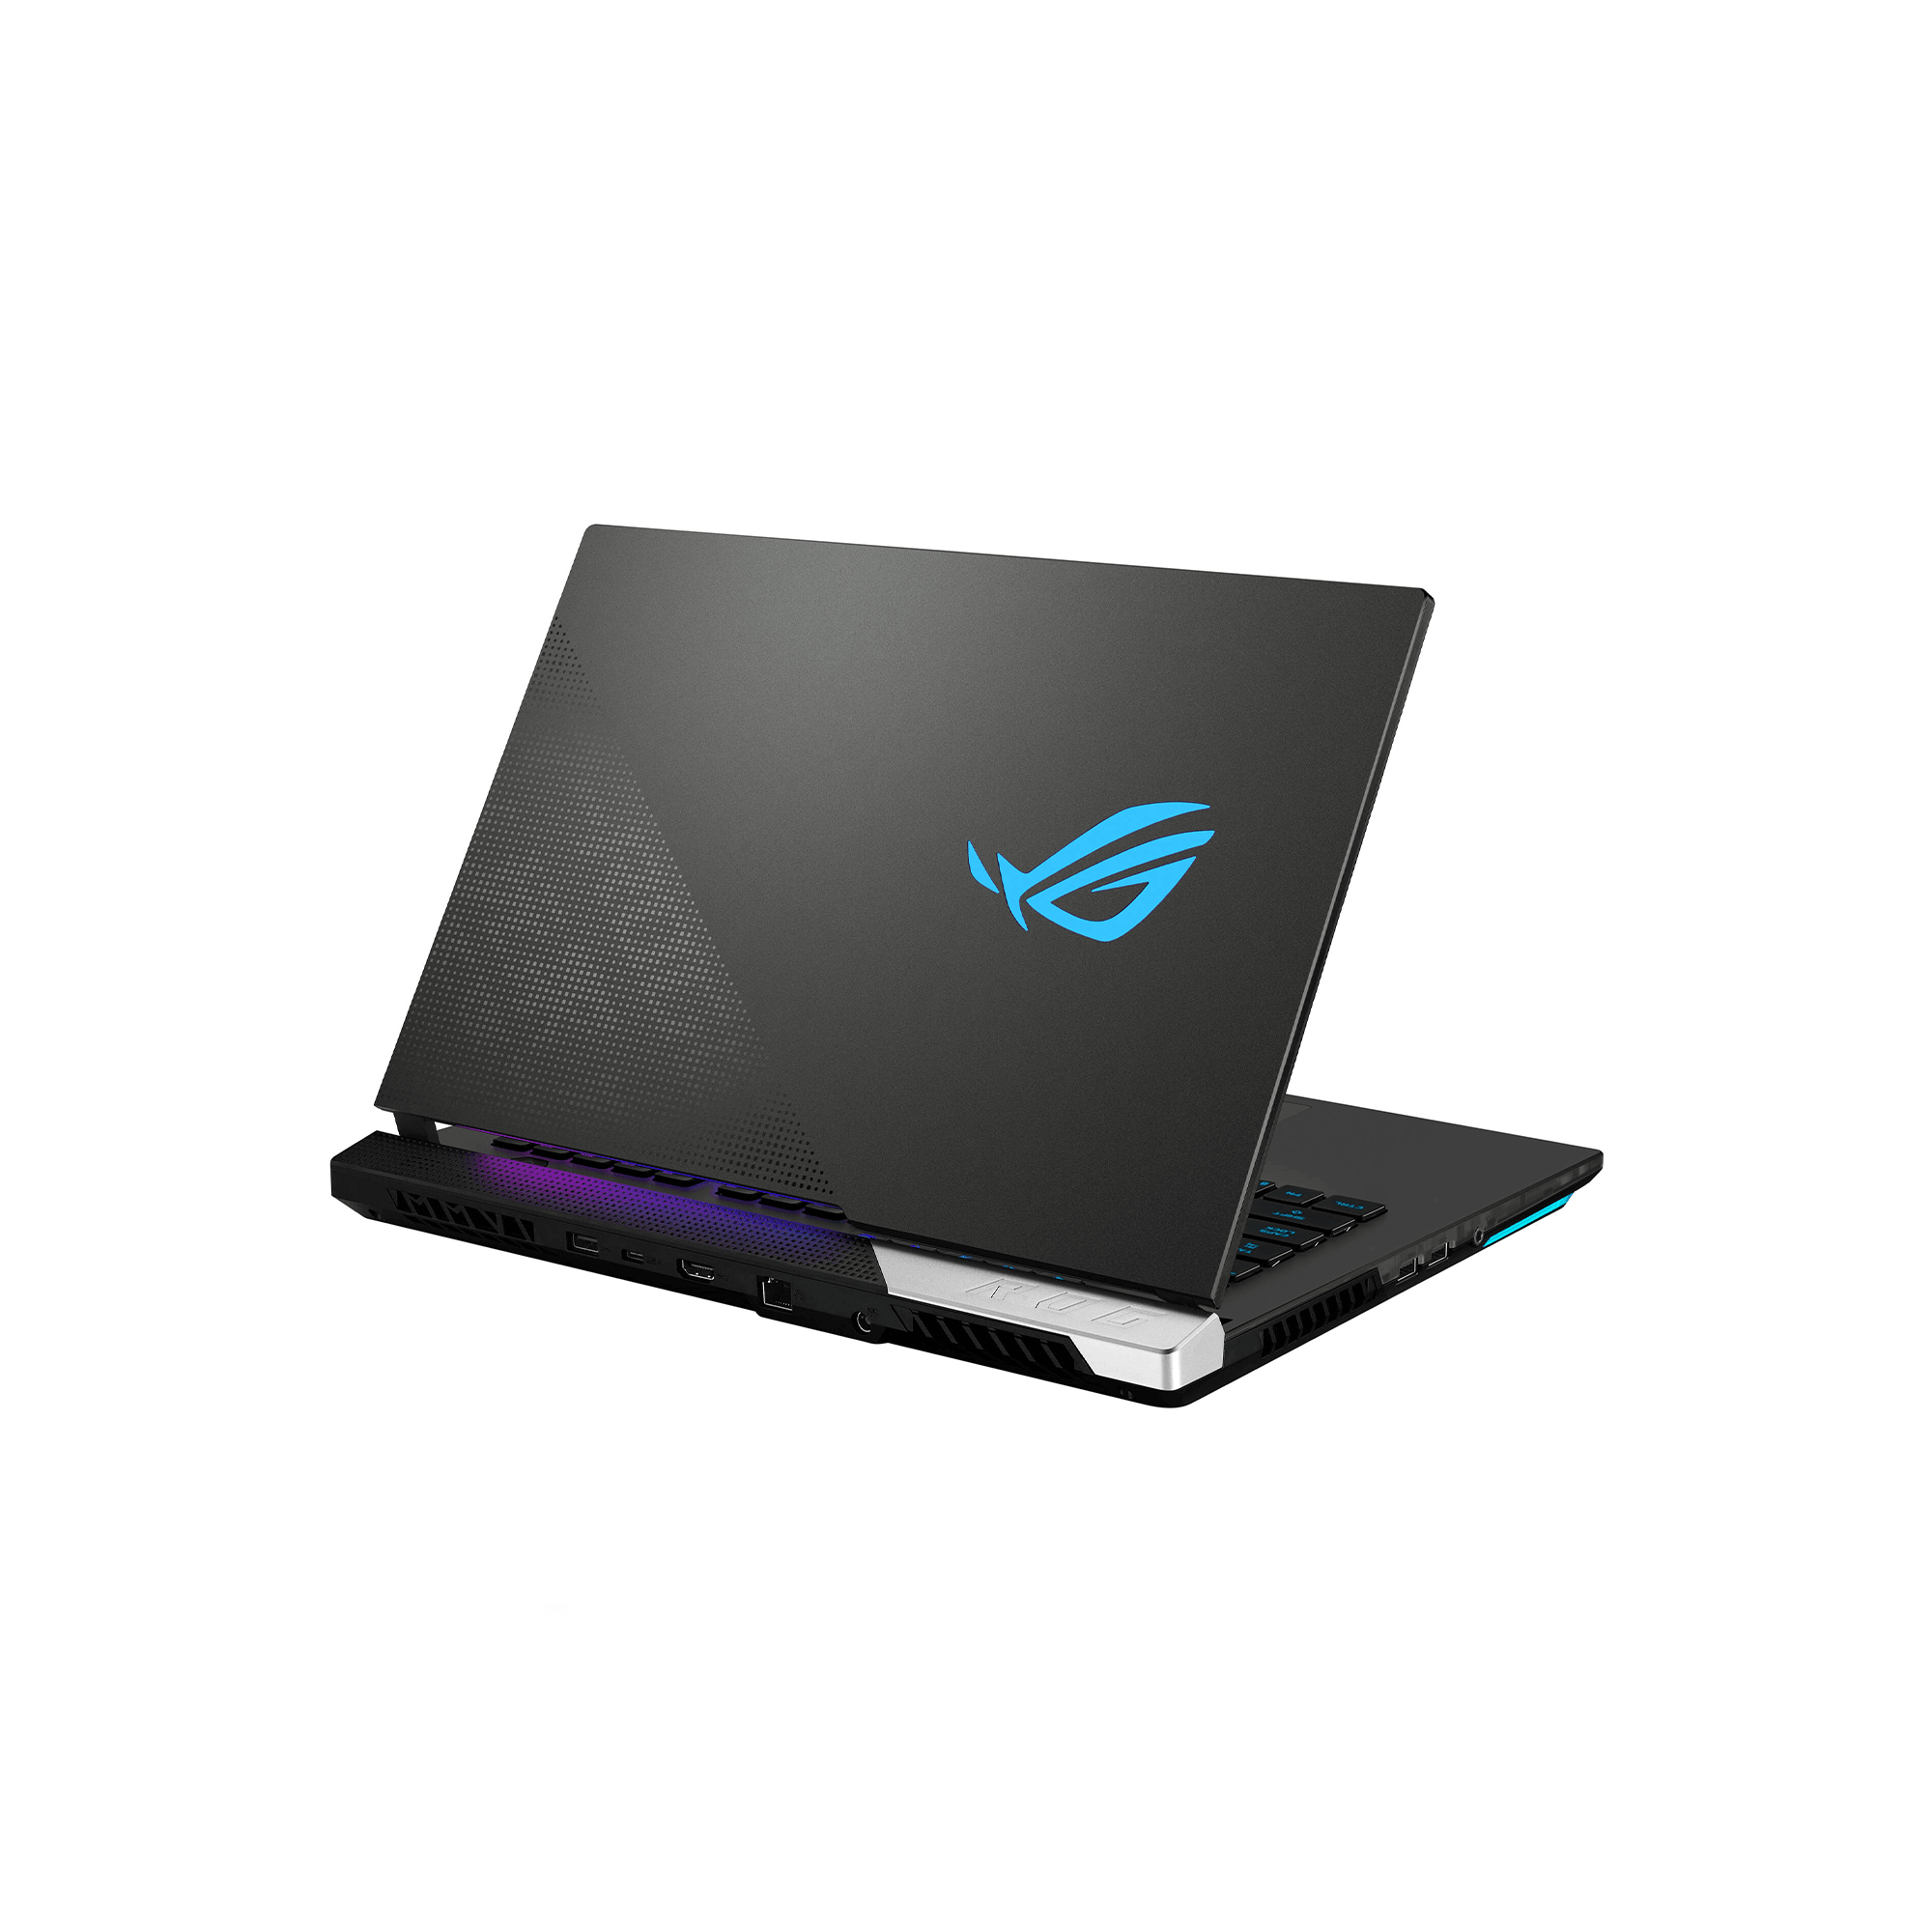 Asus Rog Strix Scar 15 Gaming Laptop,AMD Ryzen 9 5900HX,15.6" FullHD, RTX 3080, Windows 11 Home